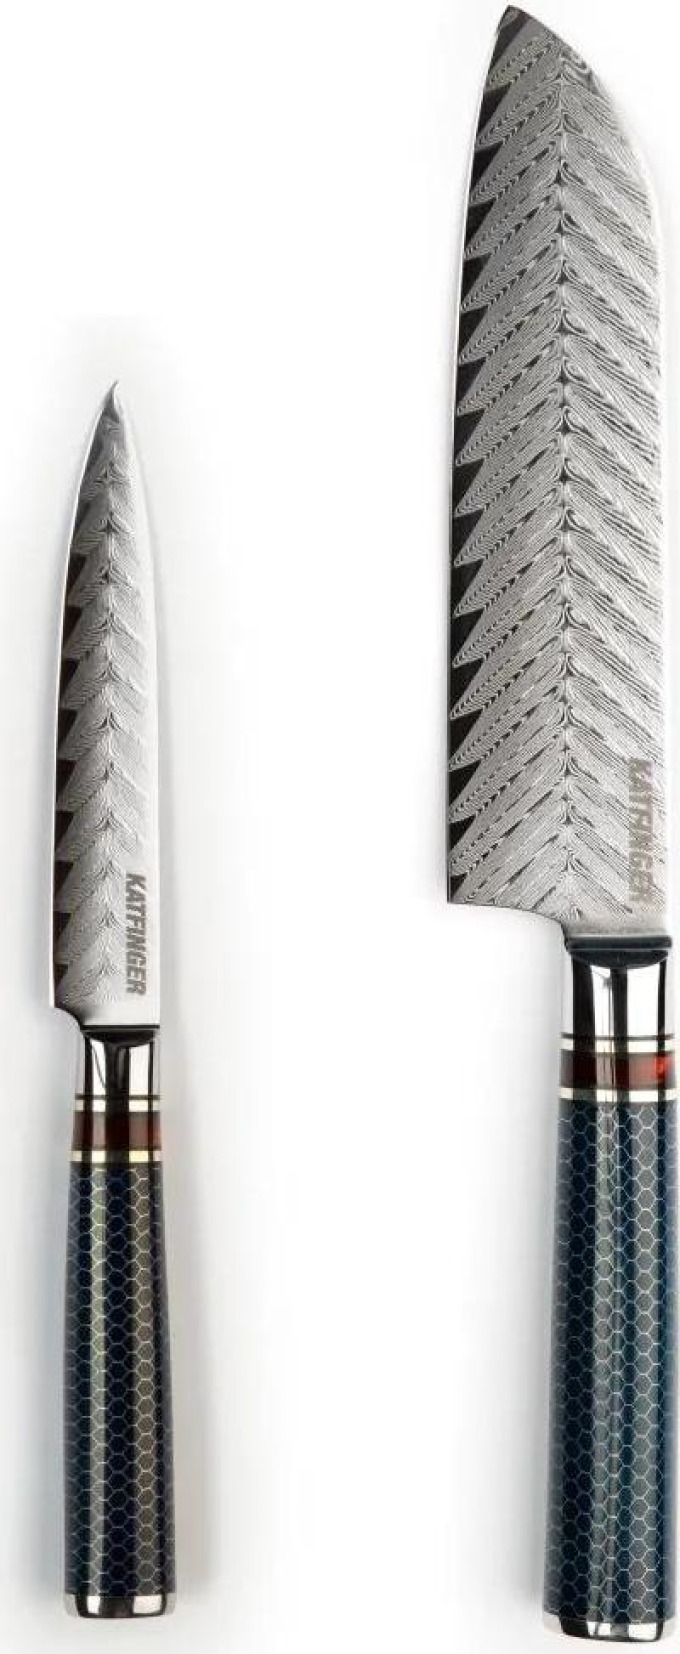 Dvoudílná sada damaškových nožů ze série Resin s ergonomickými rukojetmi z pryskyřice a hliníkovými vlákny